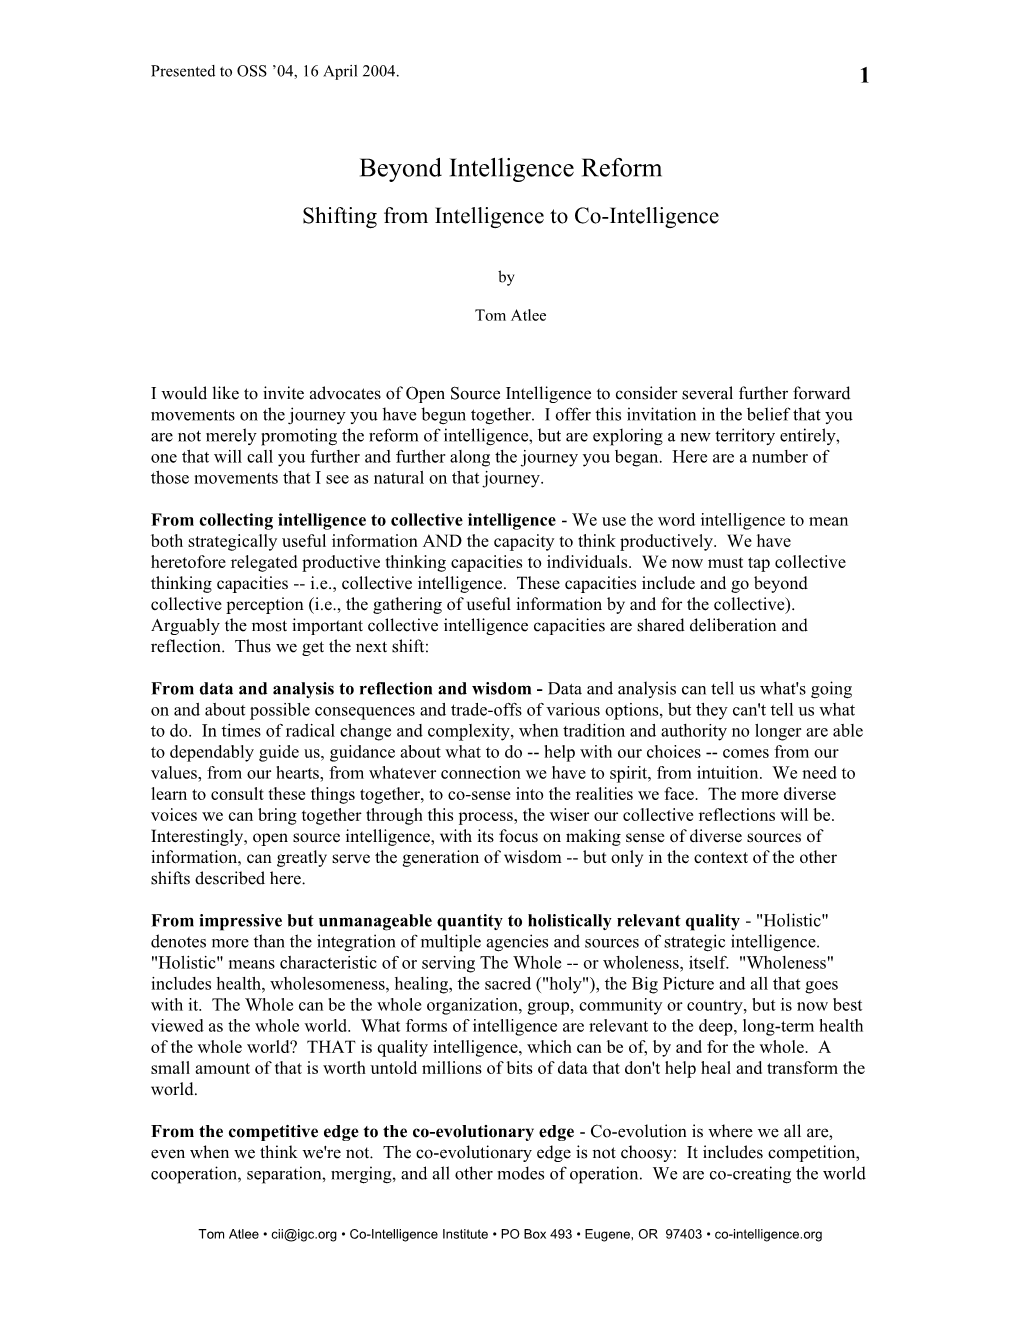 Beyond Intelligence Reform